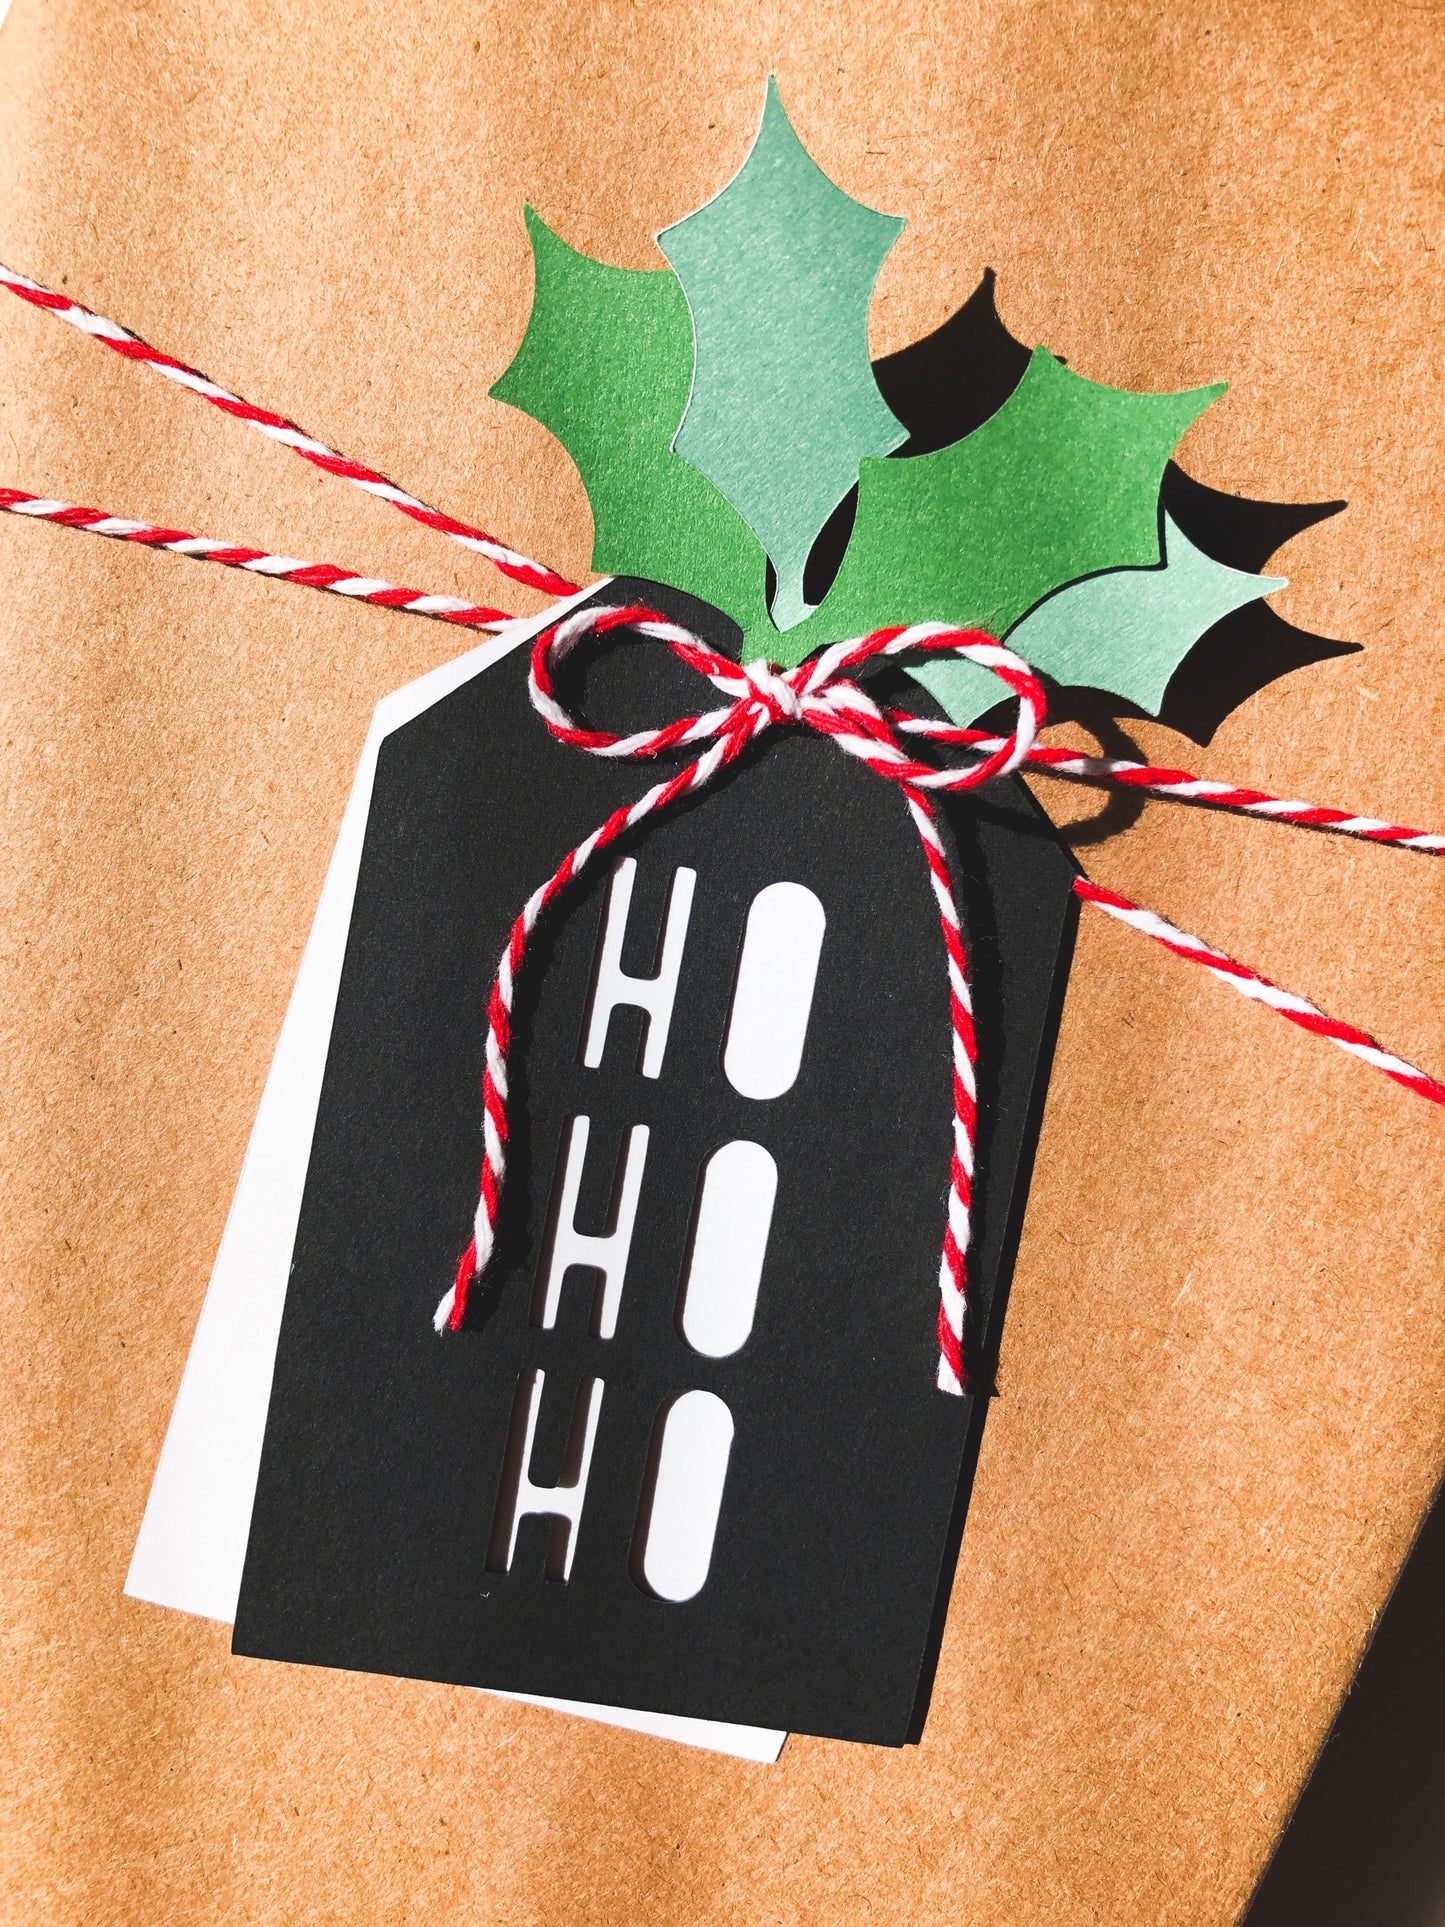 Ho Ho Ho Christmas Gift Tag Set with Holly Leaves, Set of 10